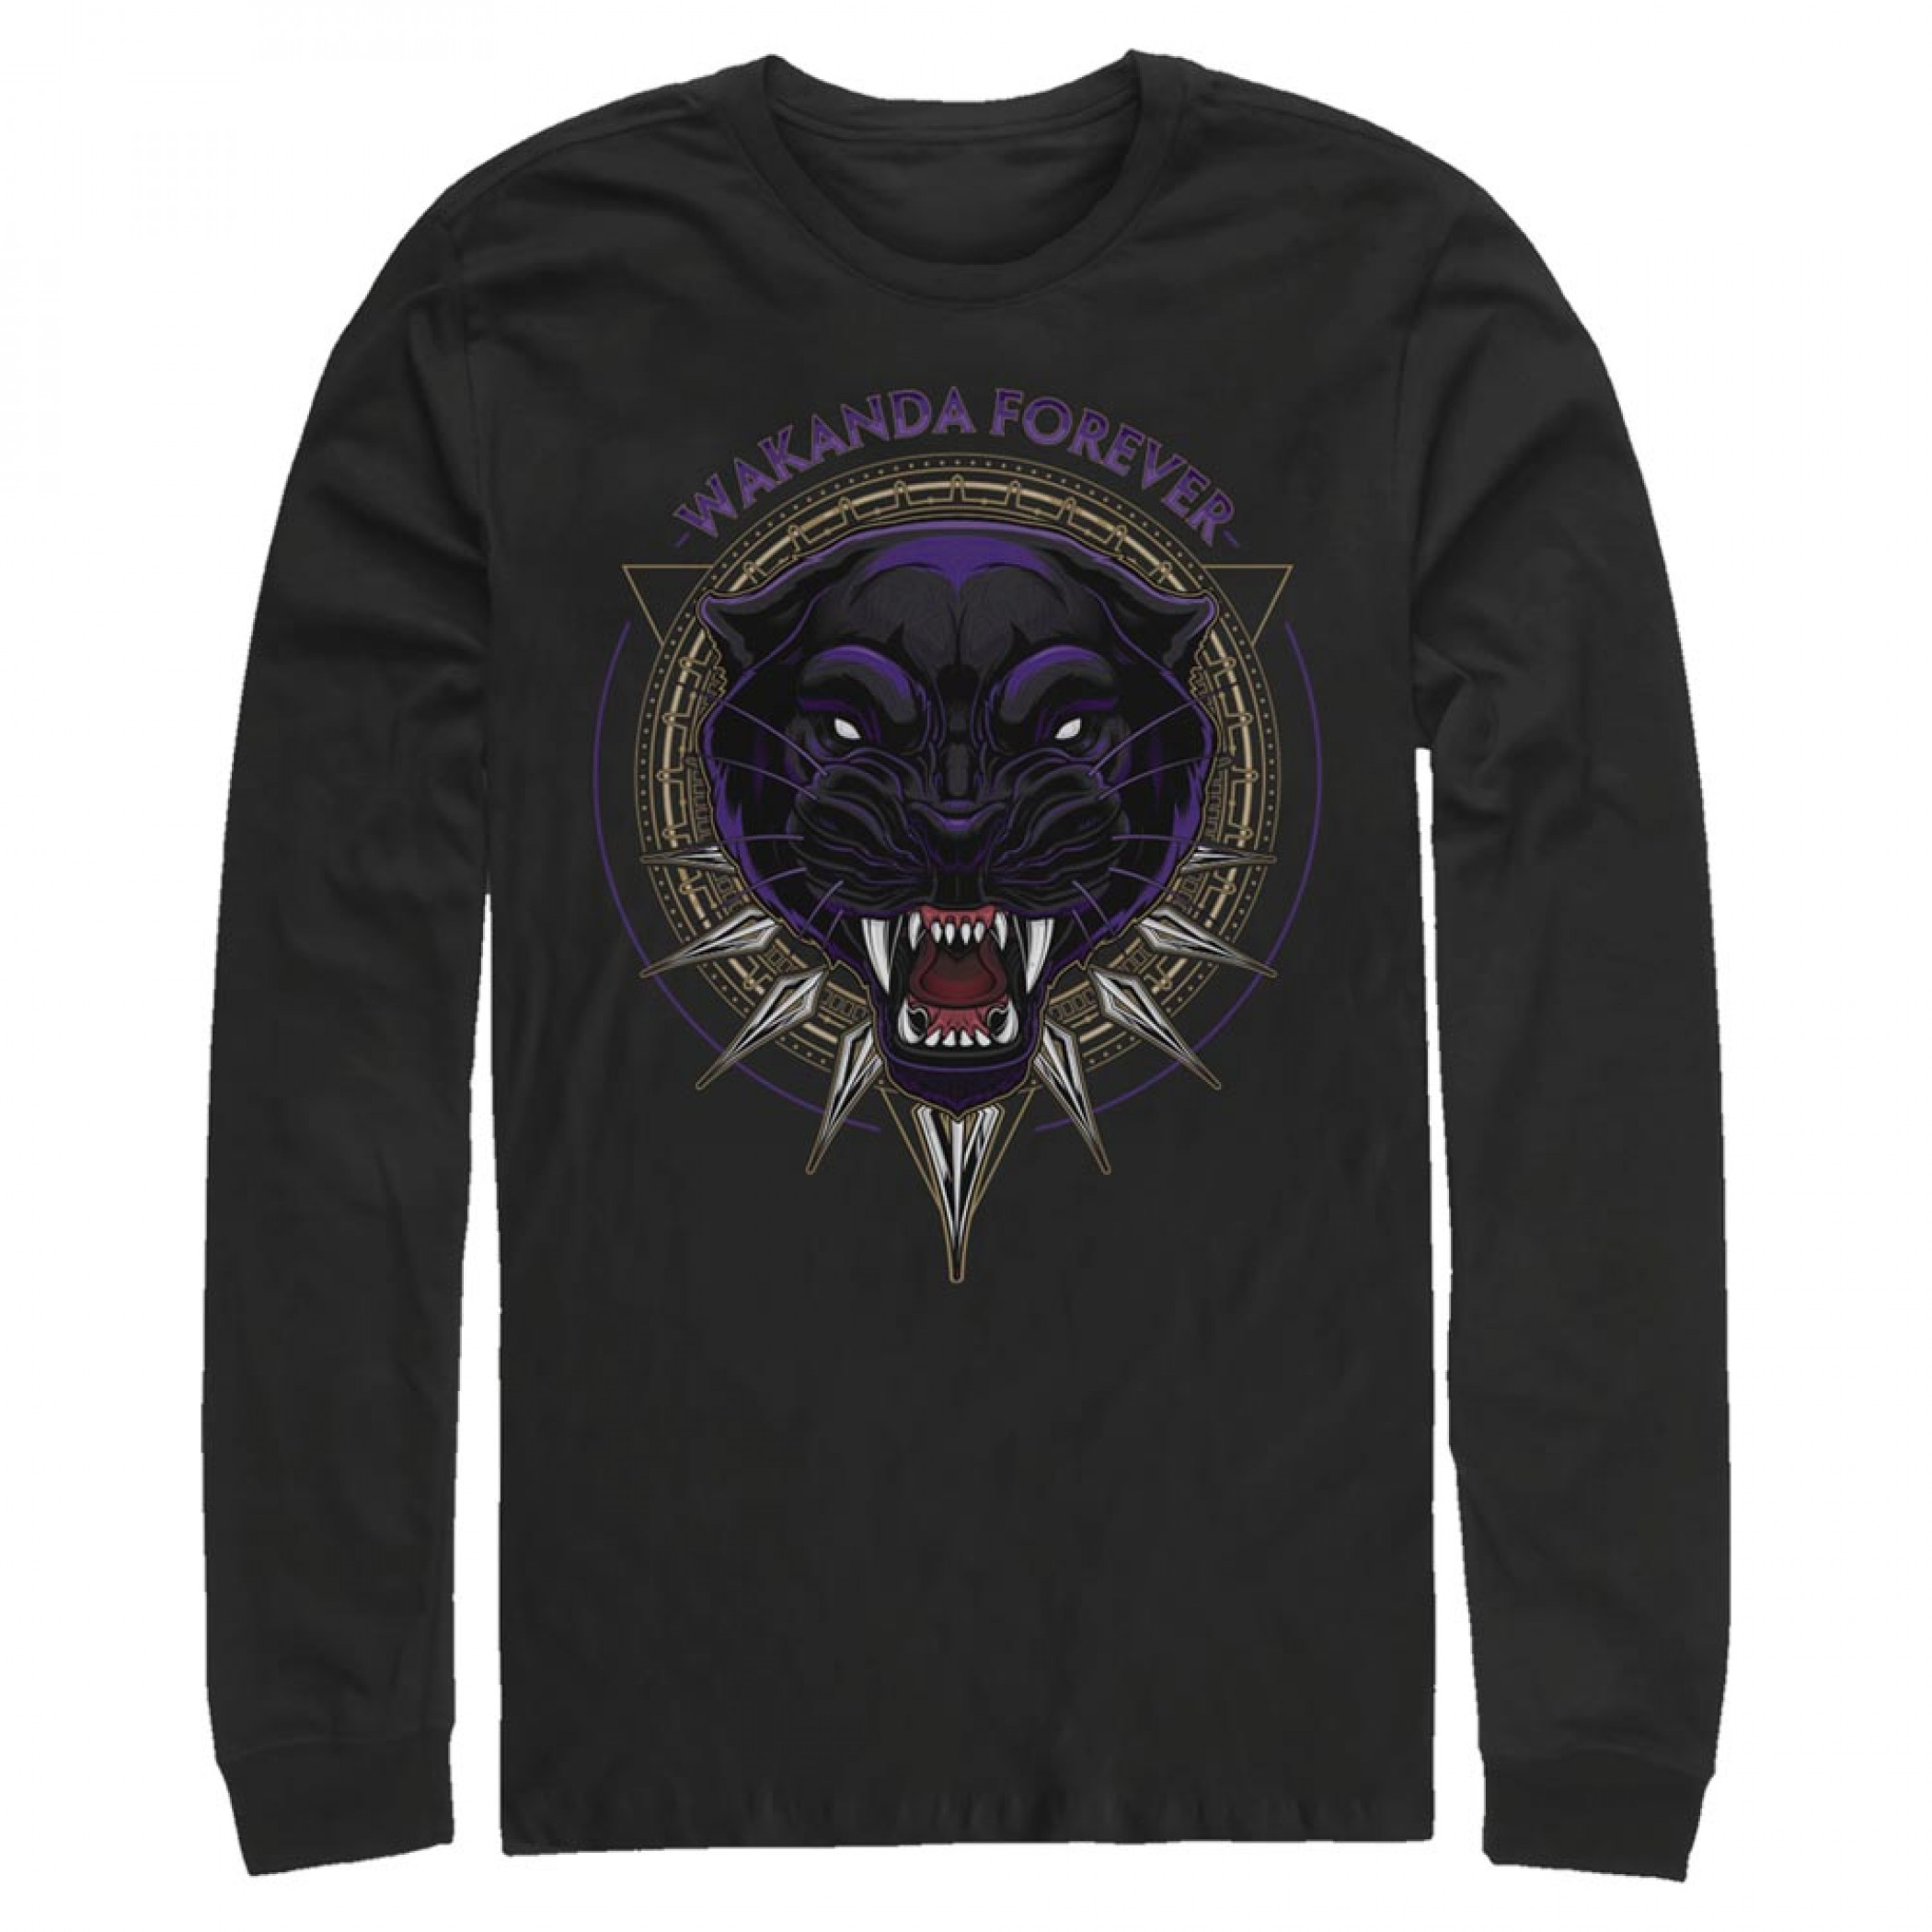 Black Panther Wakanda Forever Long Sleeve Shirt